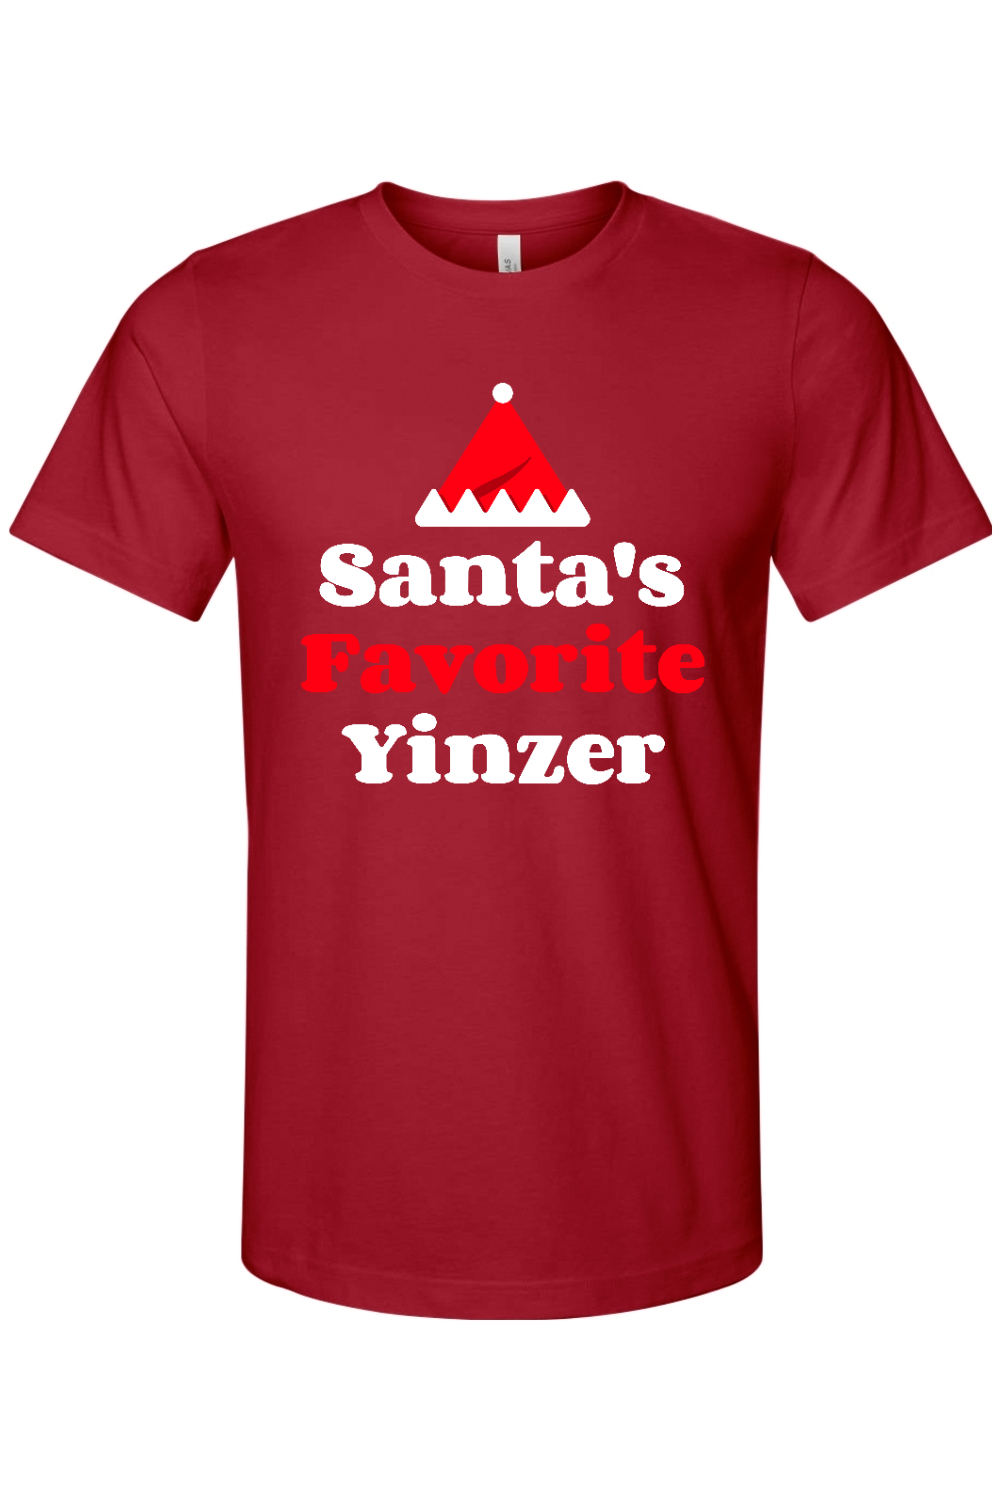 Santa's Favorite Yinzer - Yinzylvania